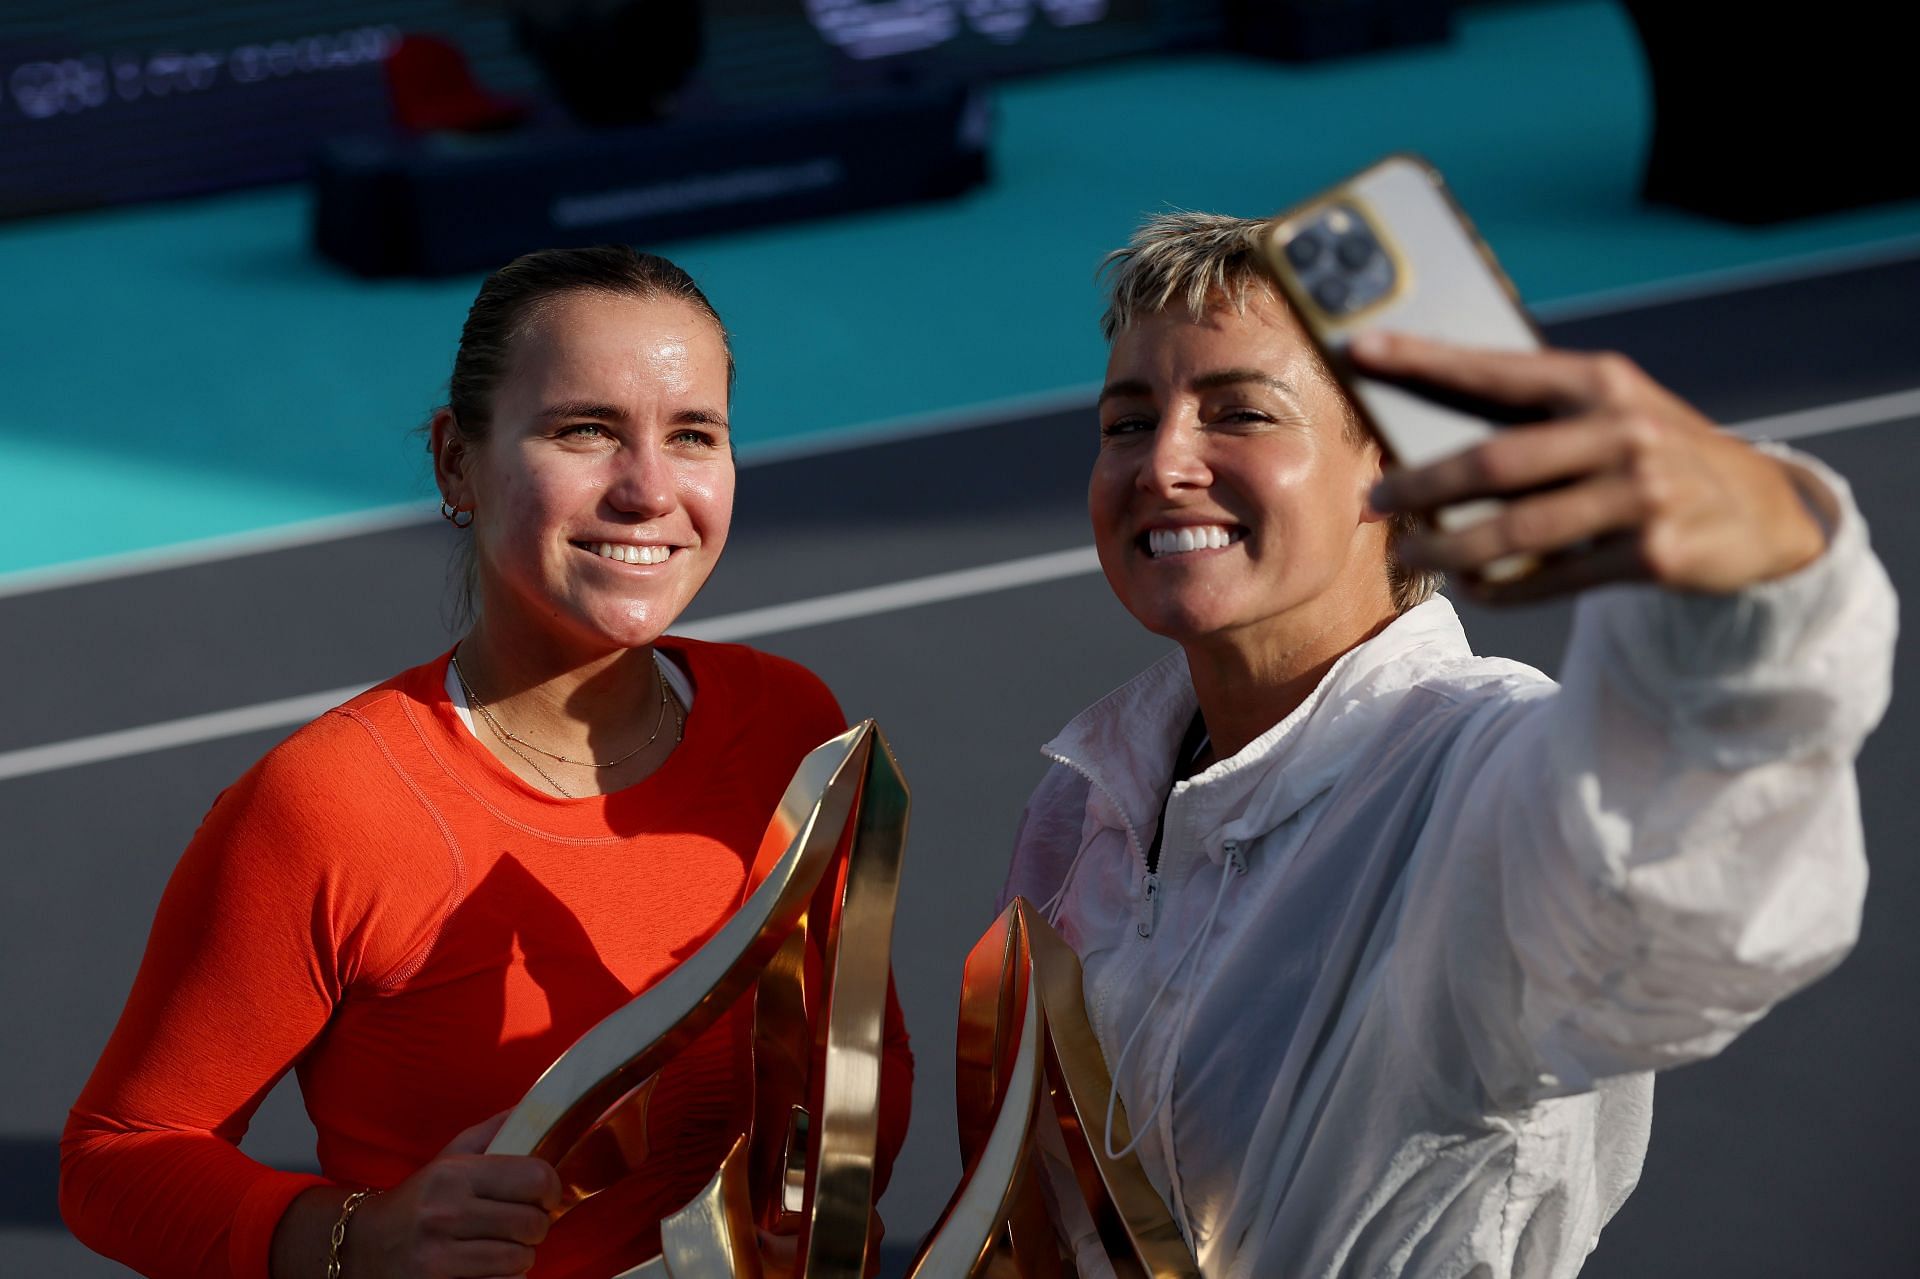 Sofia Kenin and Bethanie Mattek Sands after winning the Abu Dhabi Open